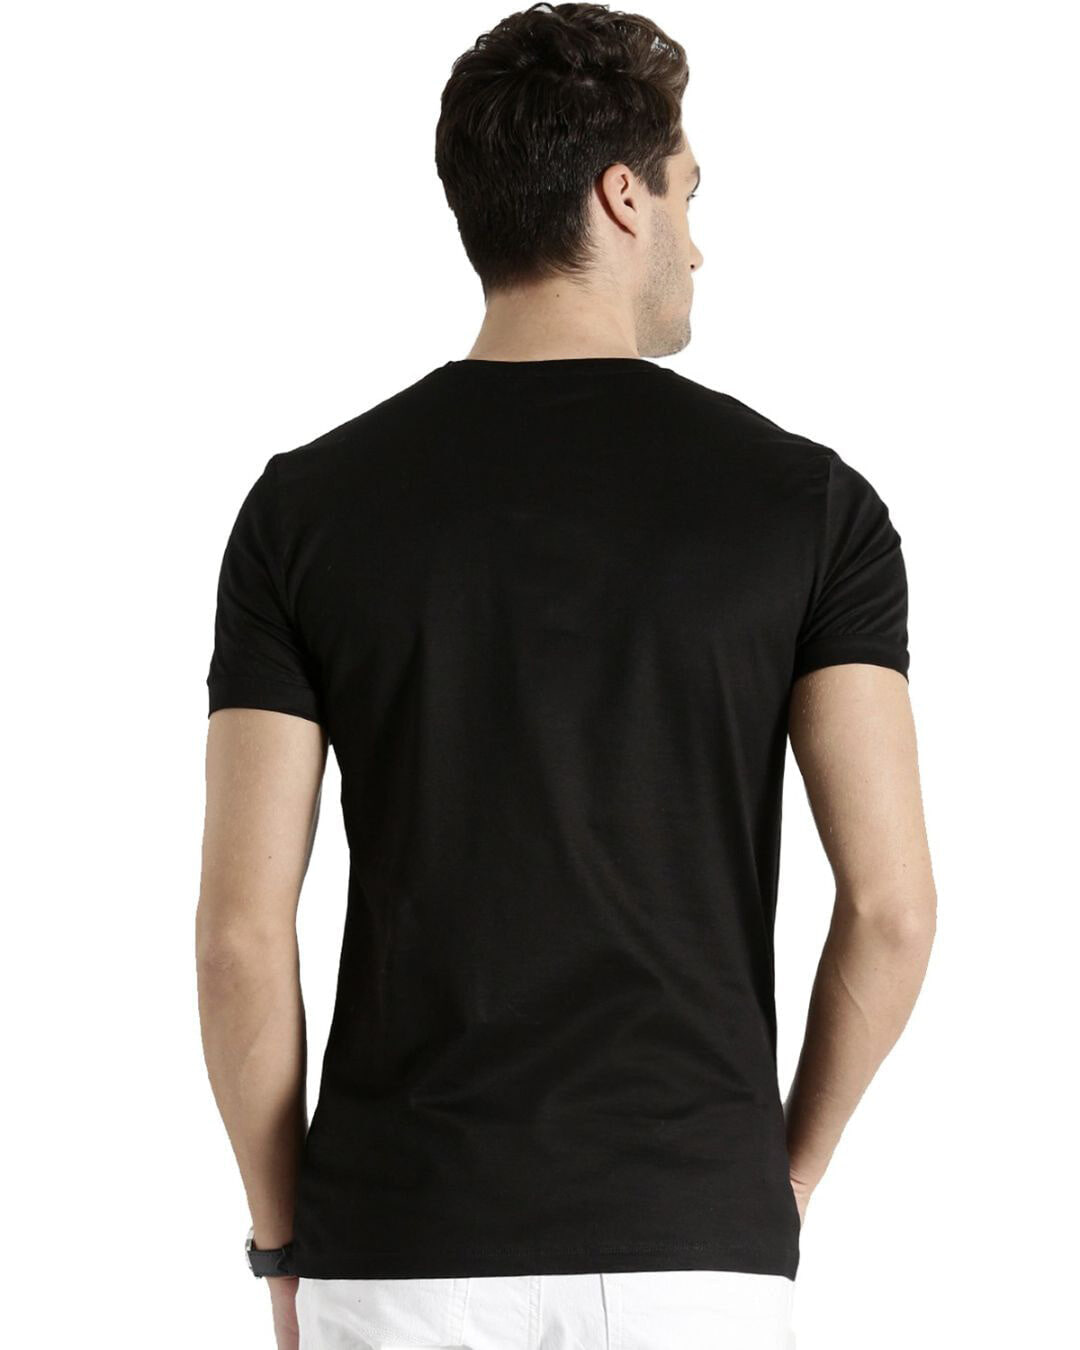 Shop Men's Black T-shirt-Back